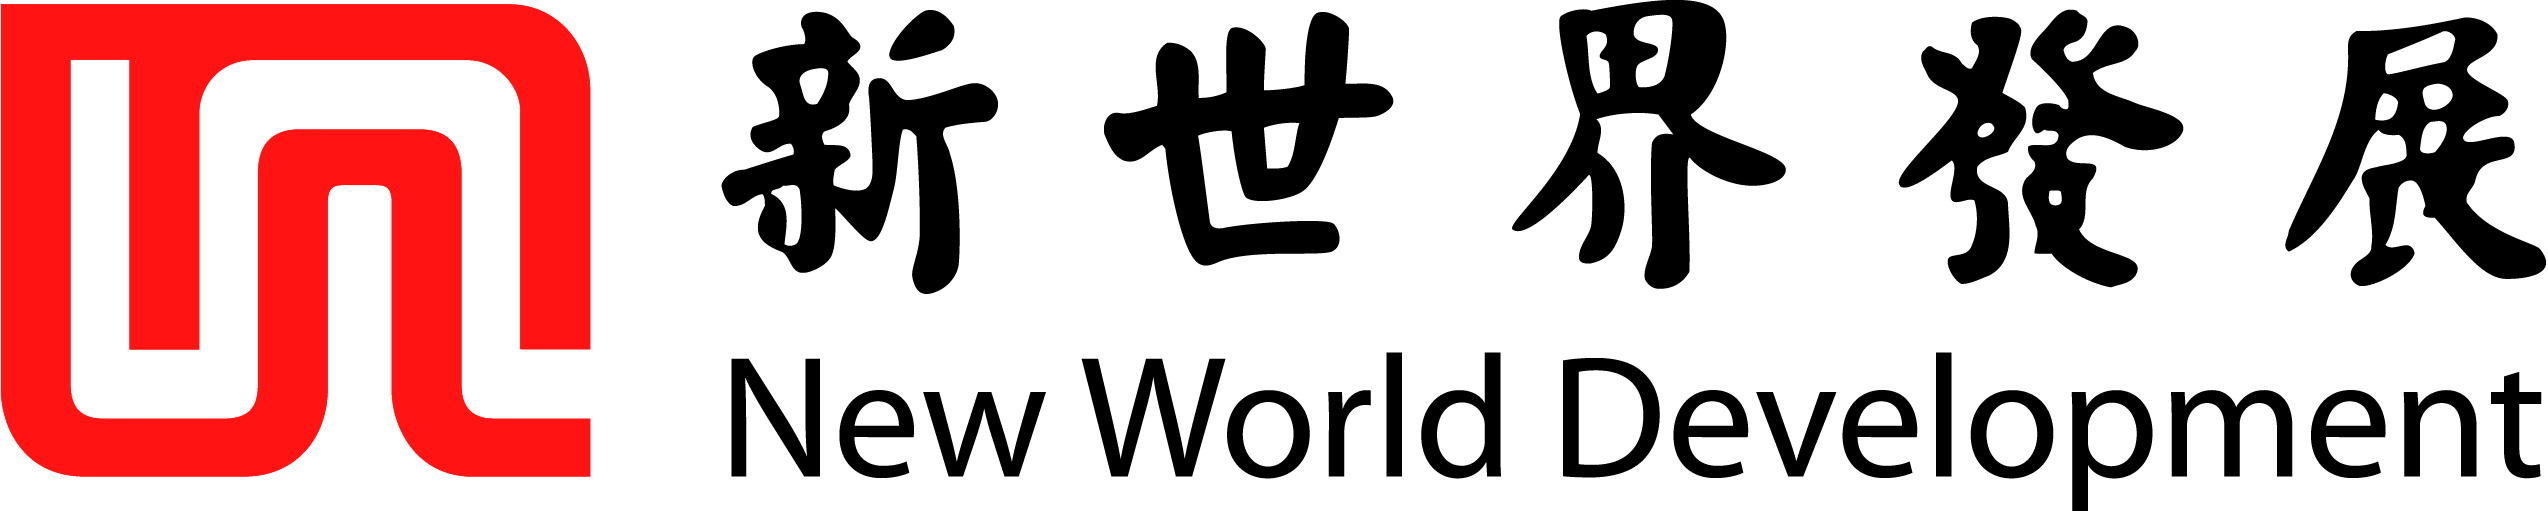 NWD-Short_horizontal-logo_bilingual